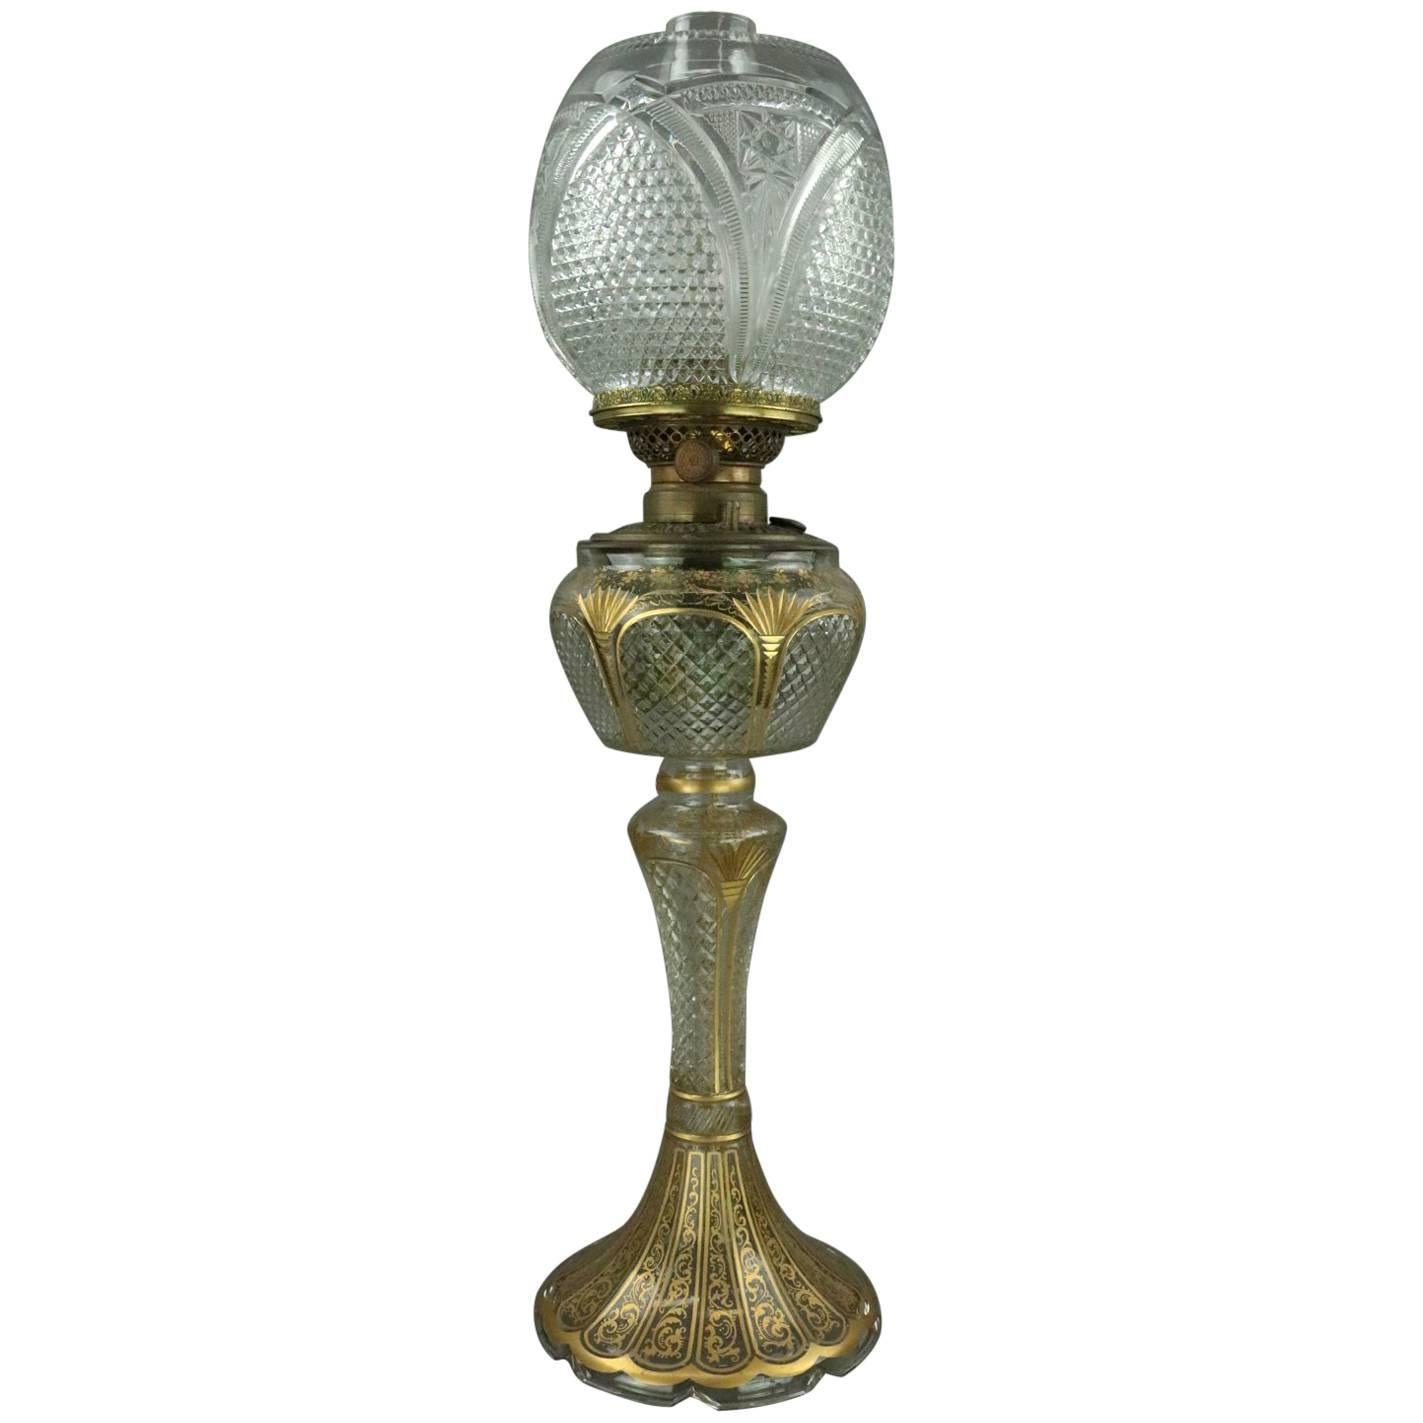 Antique Bradley & Hubbard Cut-Glass Gilt Decorated Electric Banquet Lamp